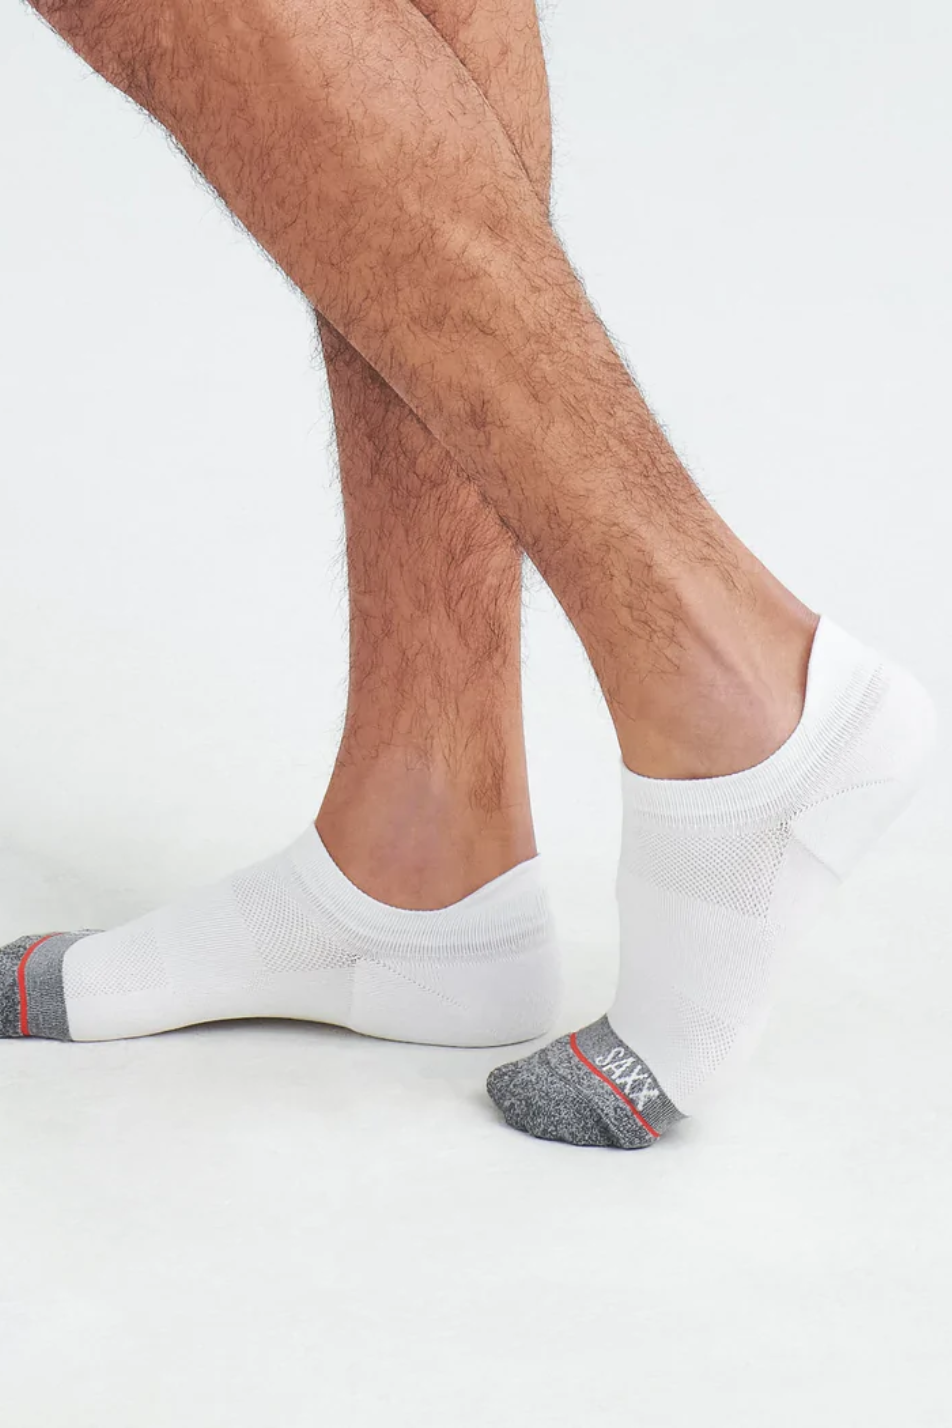 SAXX 3 Pack Men's Ankle Sock